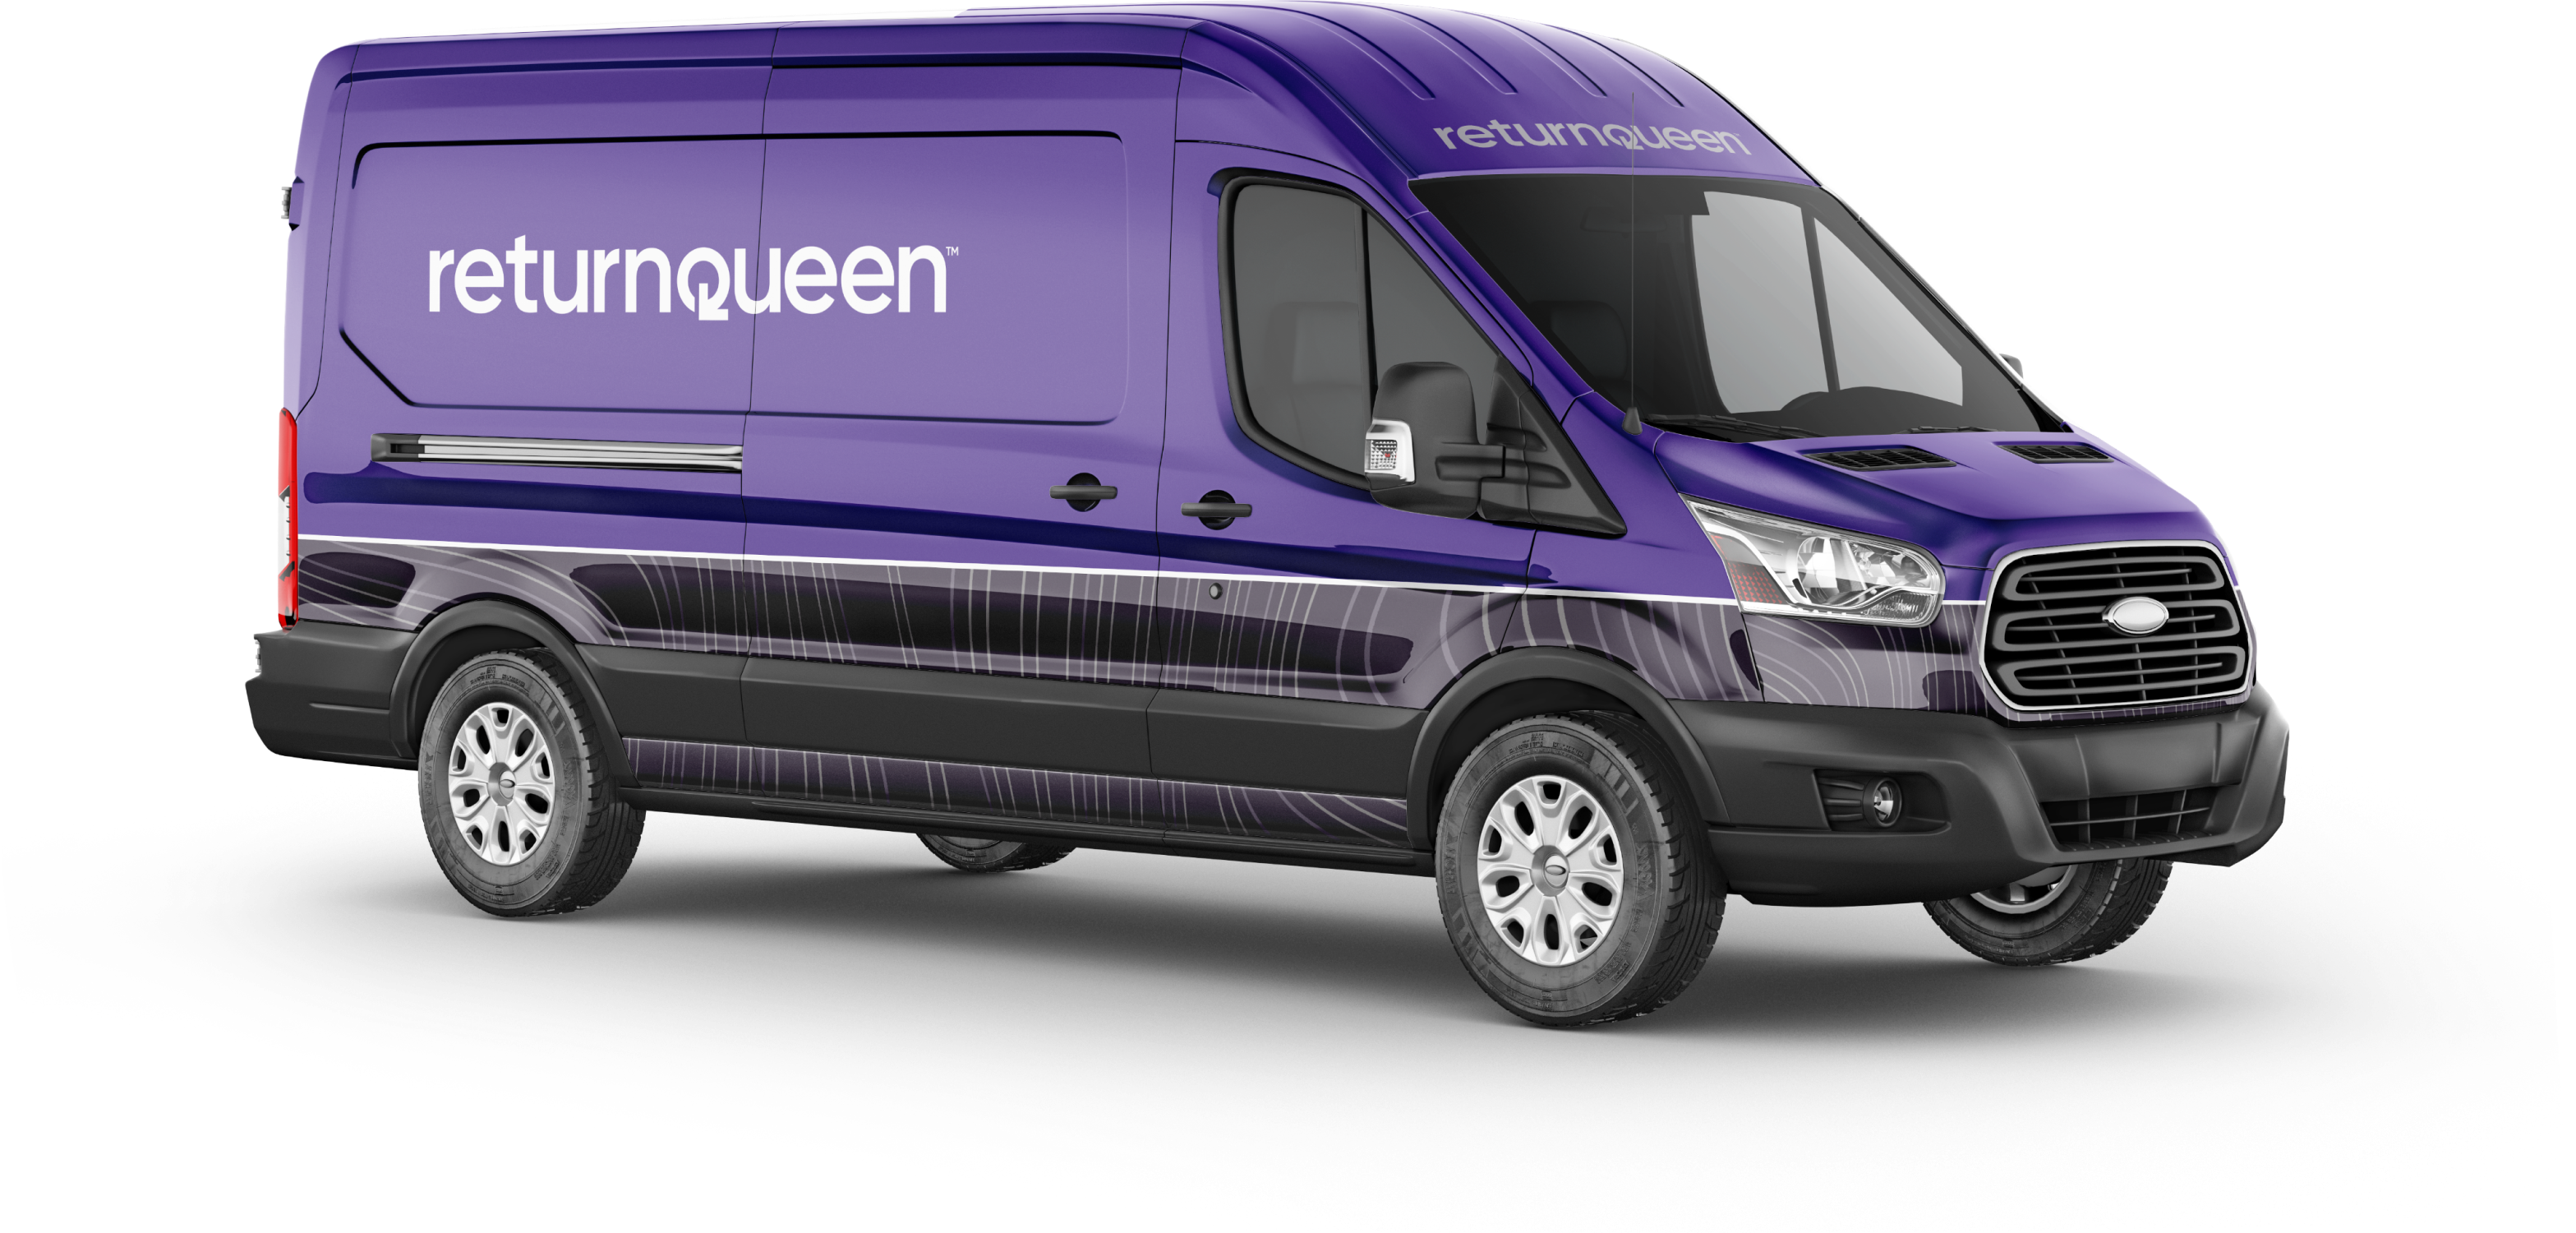 ReturnQueen Van - return your online purchases with ease